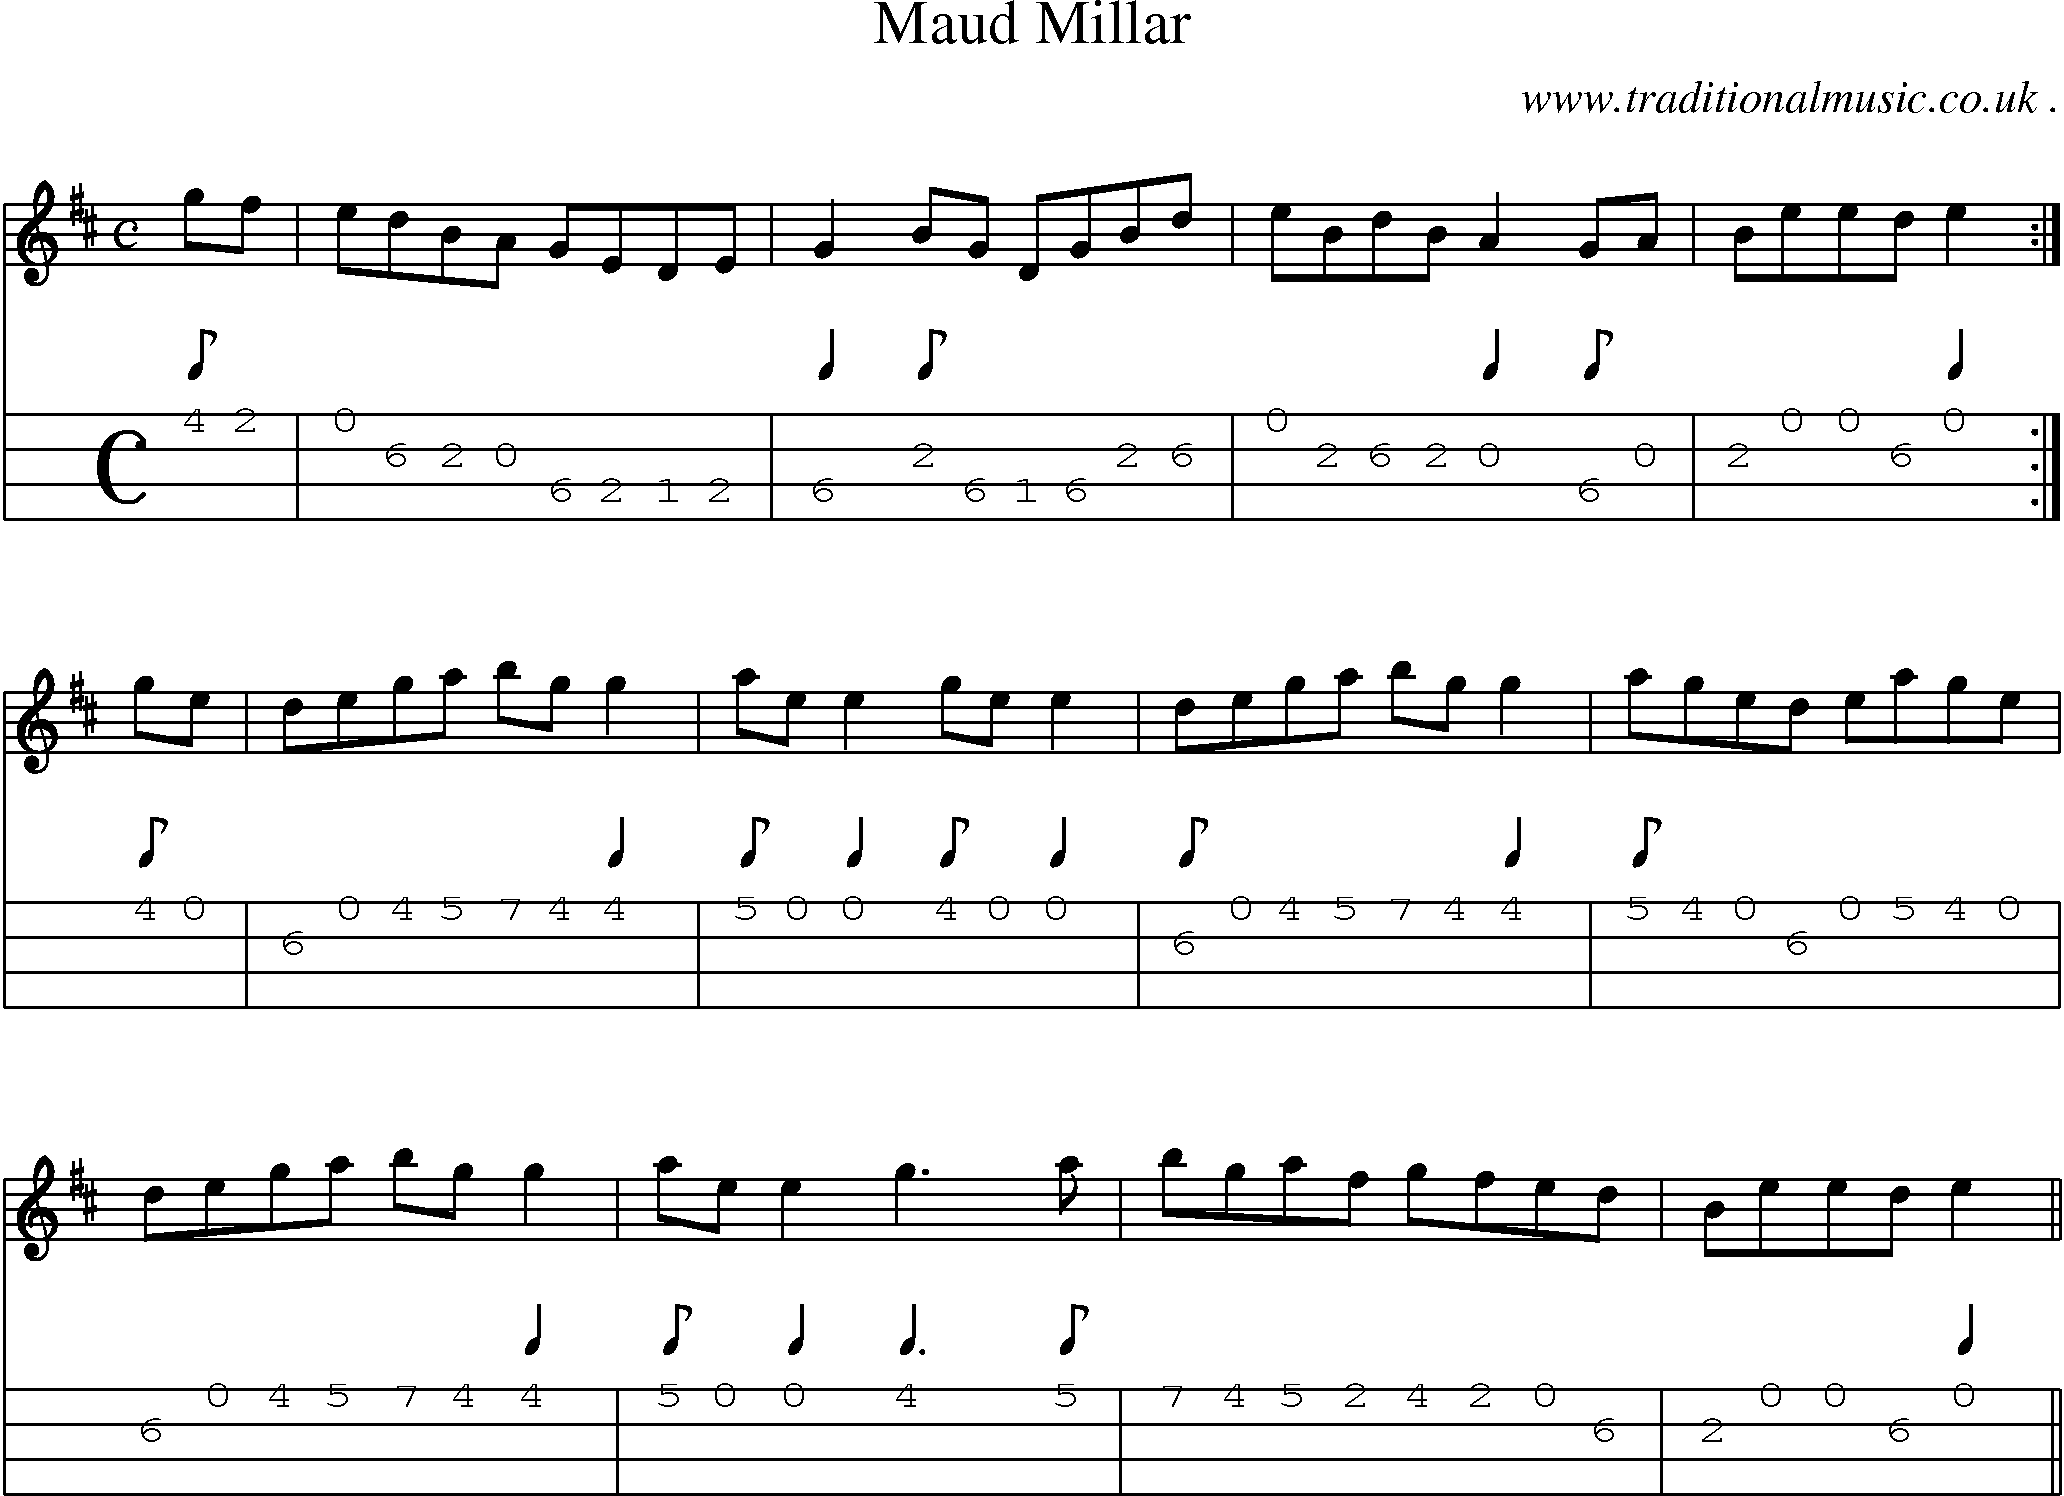 Sheet-Music and Mandolin Tabs for Maud Millar